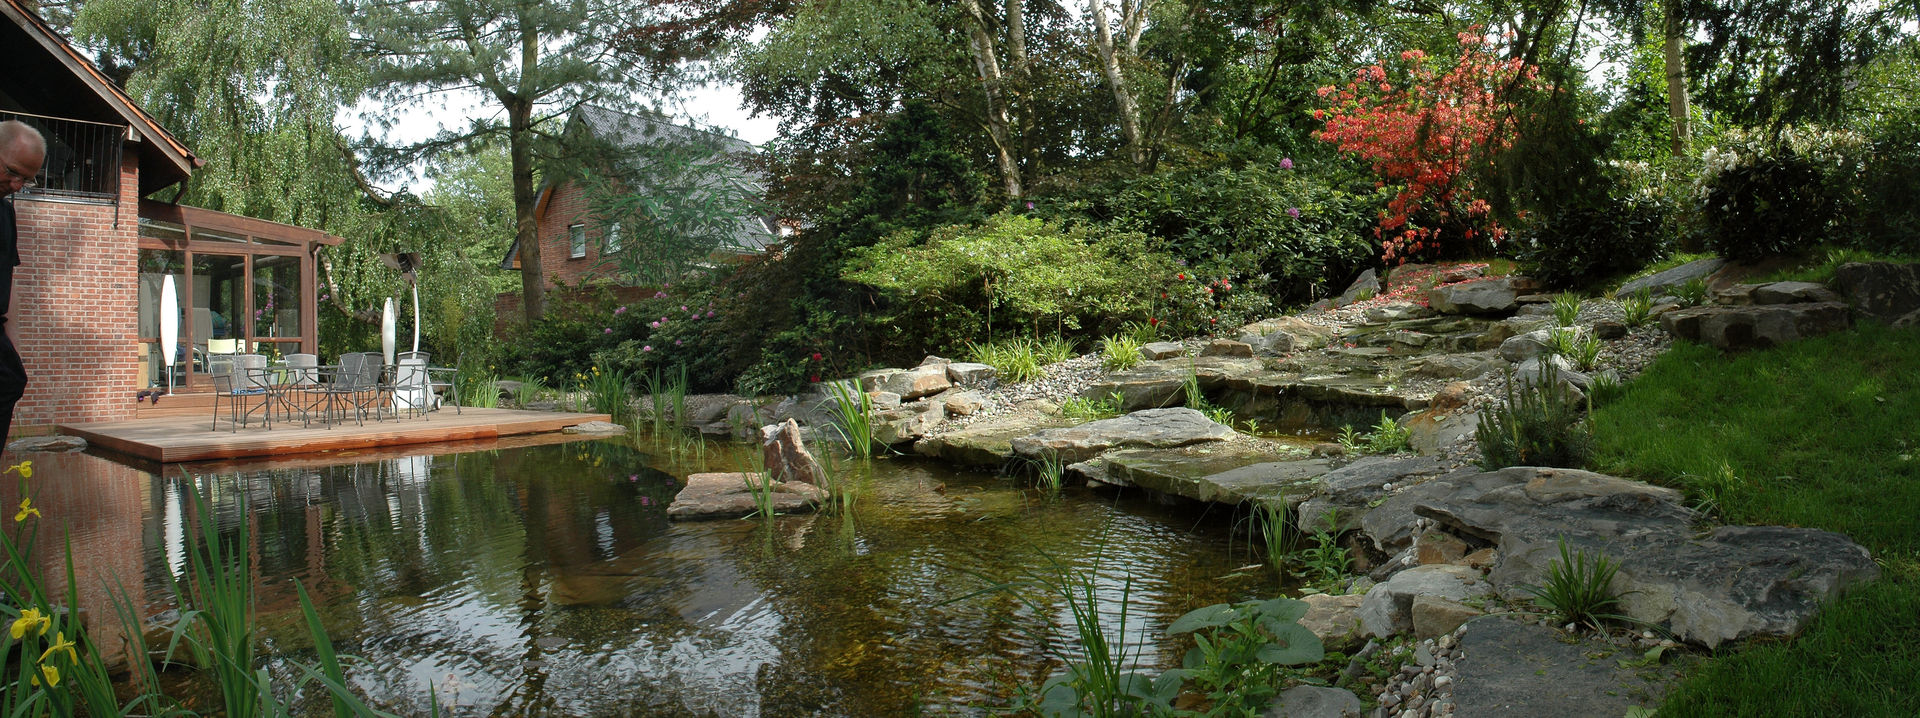 Ogród, Architektura krajobrazu- naturalne systemy uzdatniania wod Architektura krajobrazu- naturalne systemy uzdatniania wod Azjatycki ogród